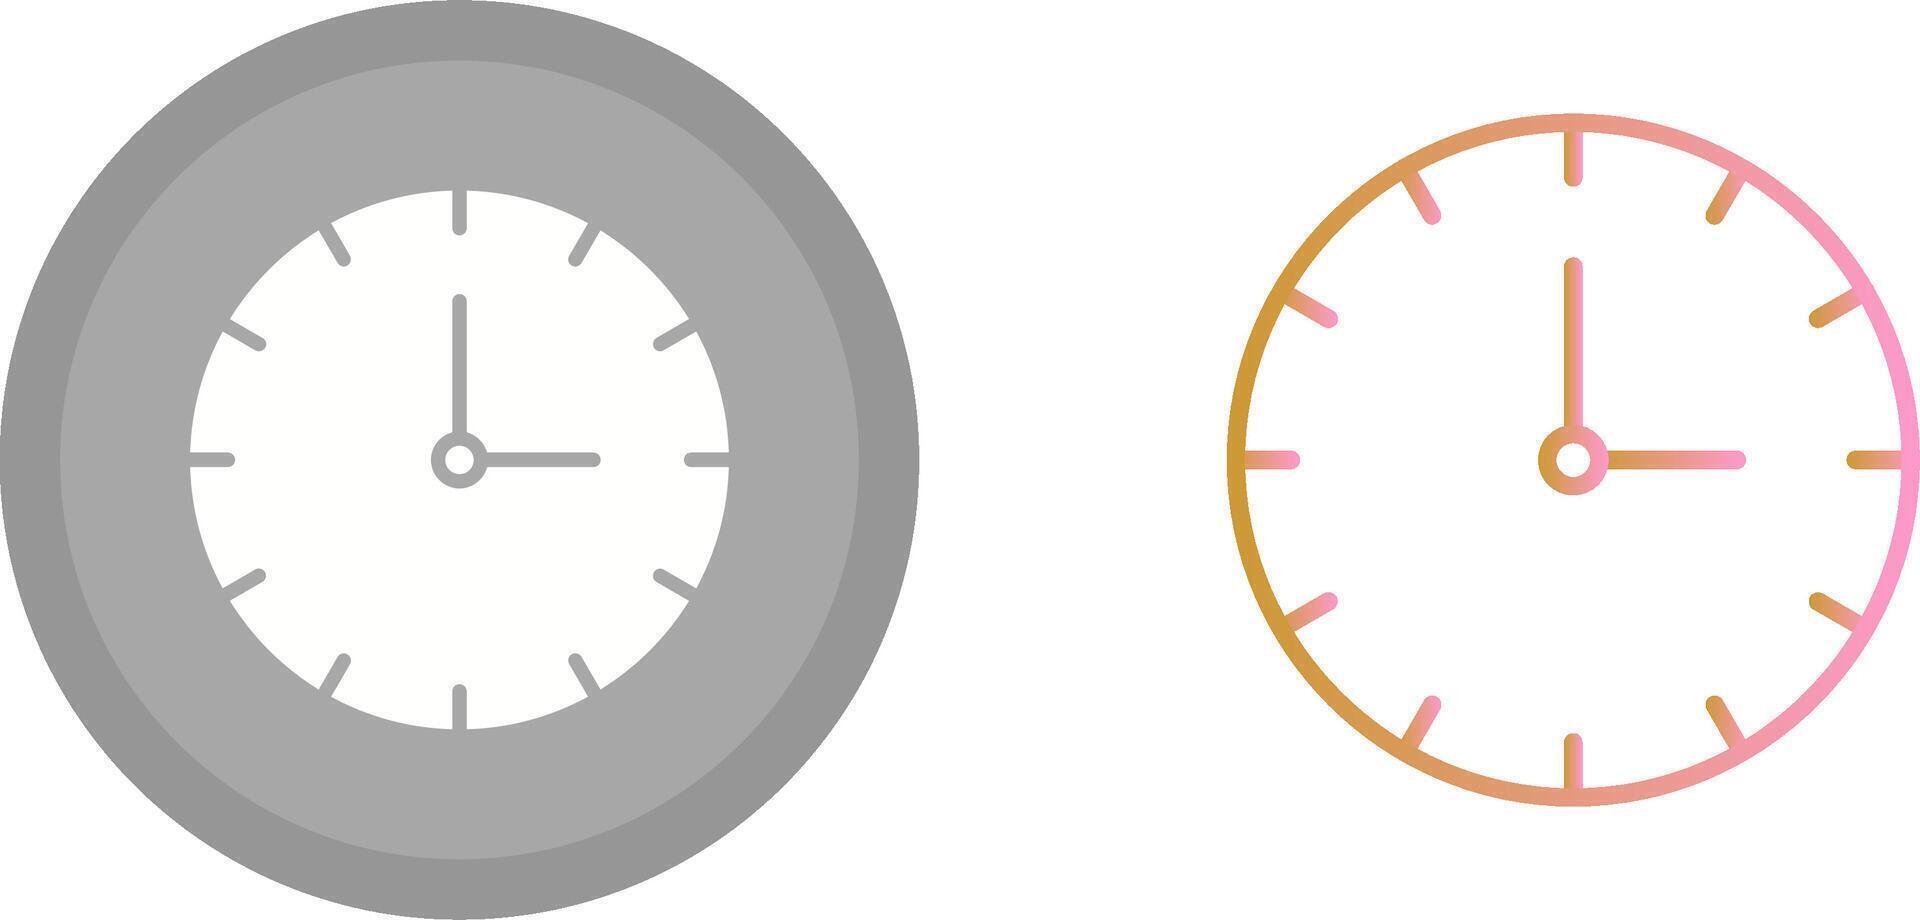 Time Icon Design vector